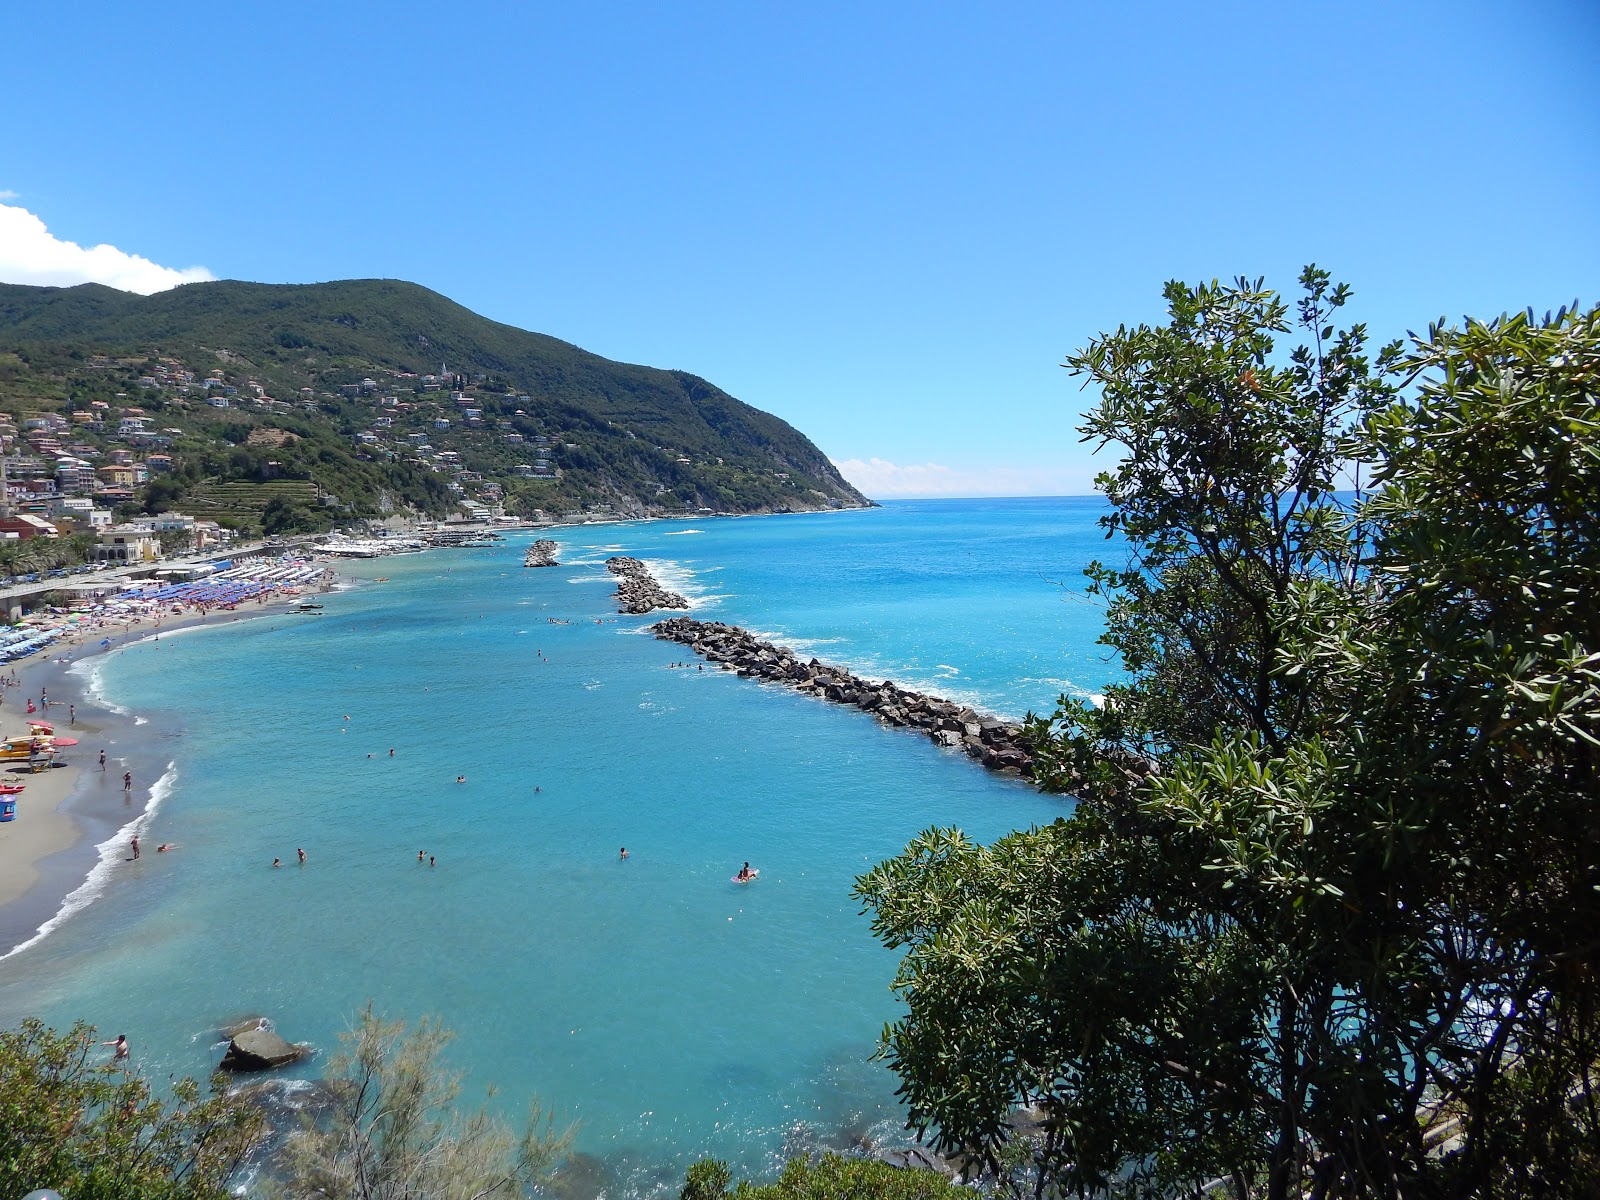 Spiaggia Moneglia'in fotoğrafı mavi sular yüzey ile